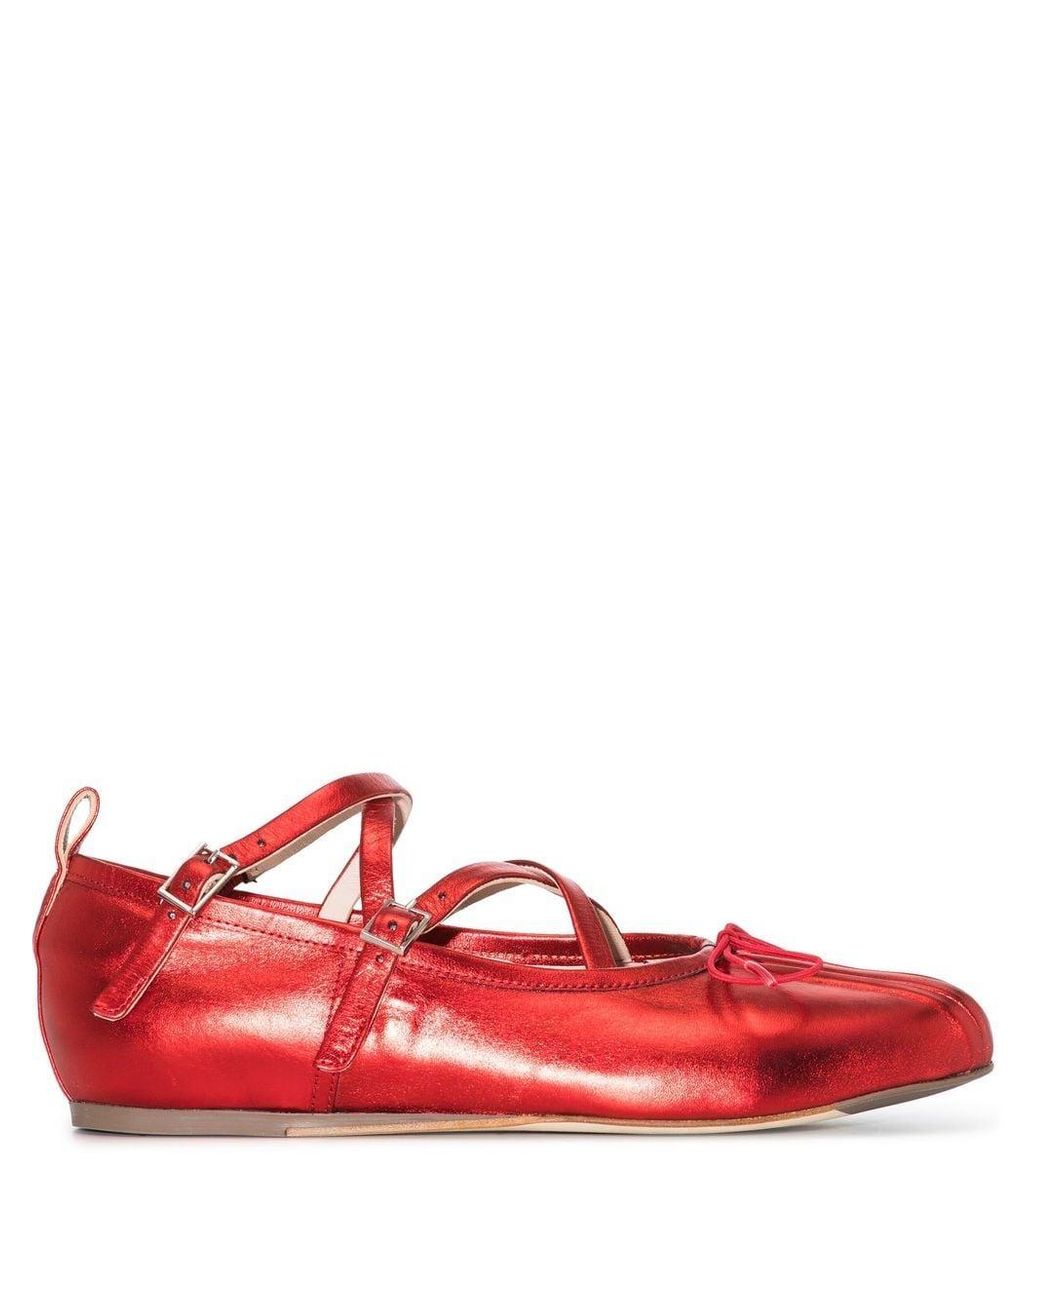 Simone Rocha Leather Criss-cross Metallic Ballerina Shoes in Red | Lyst